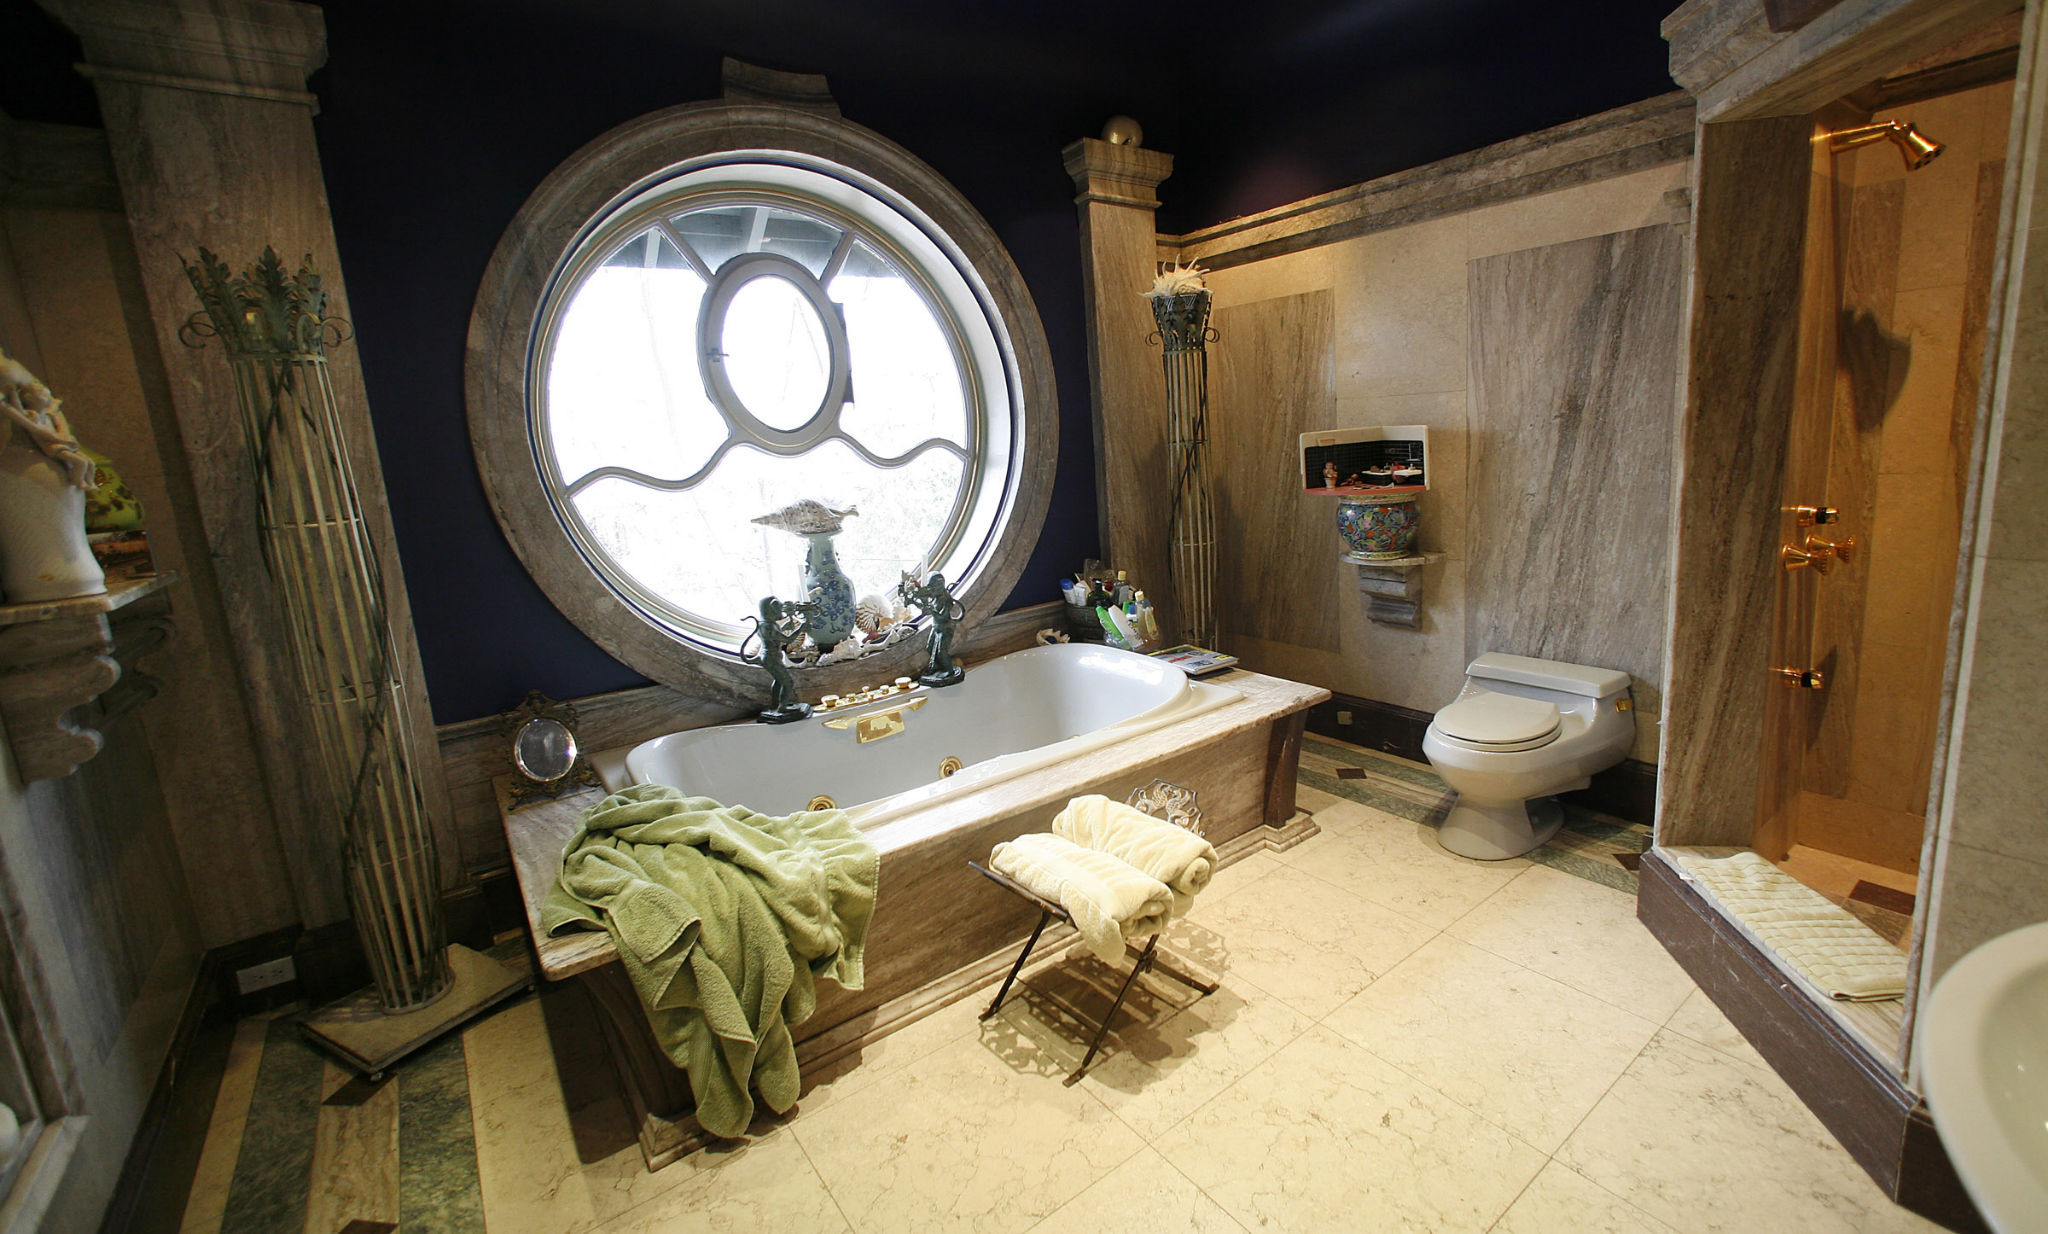 Huge-round-window-in-an-antique-bathroom